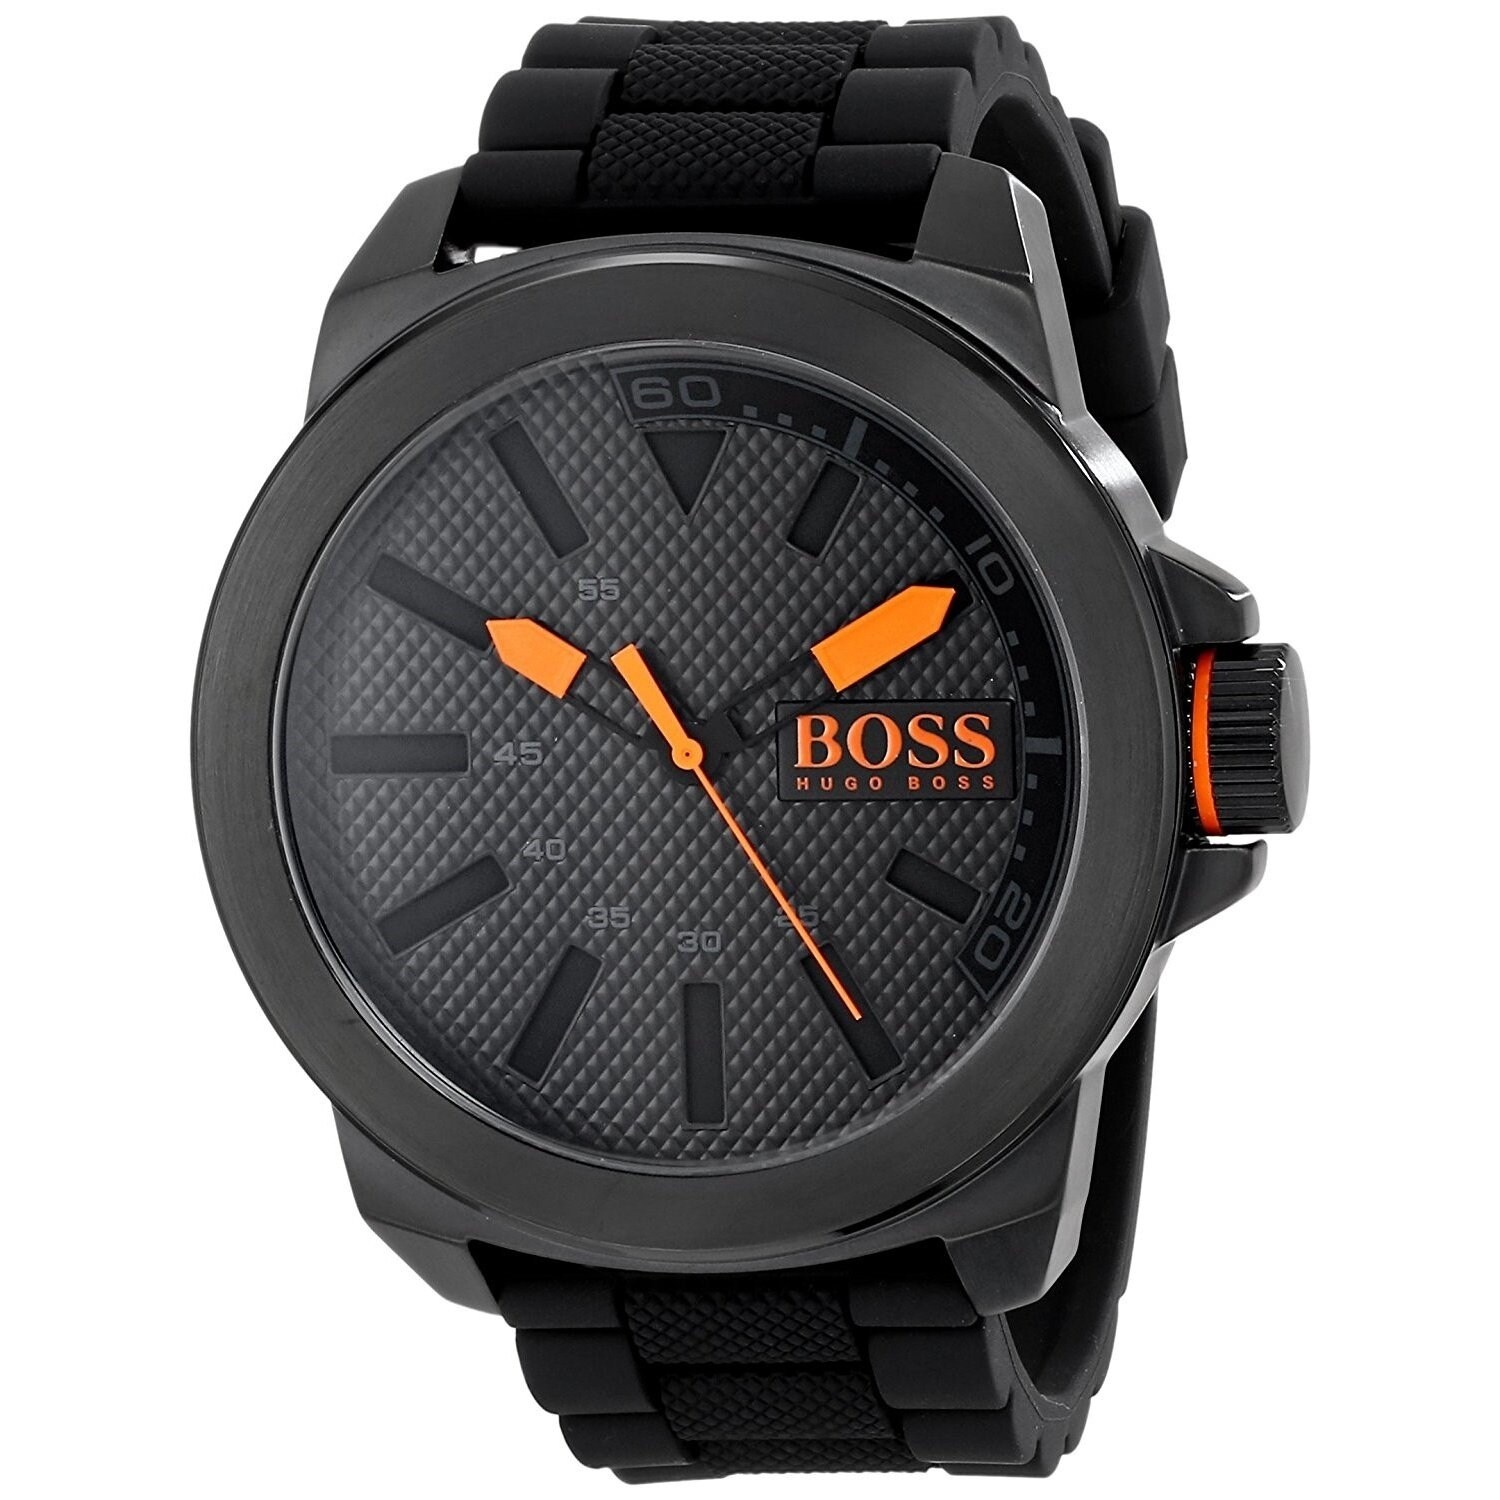 hugo boss ultra slim watch